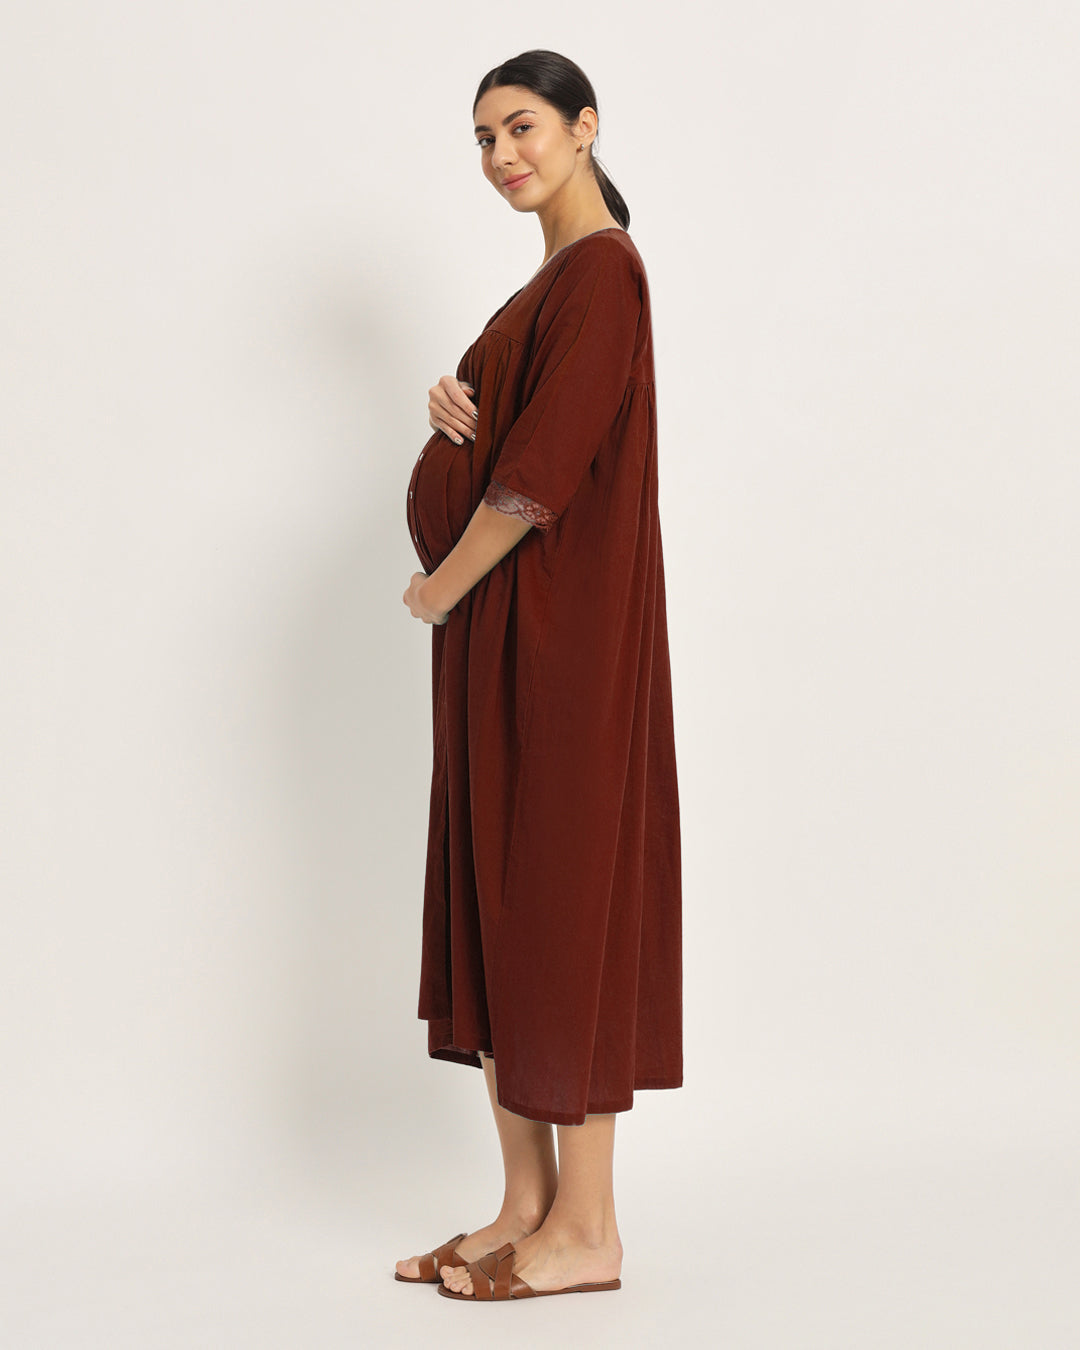 Russet Red Stylish Preggo Maternity & Nursing Dress